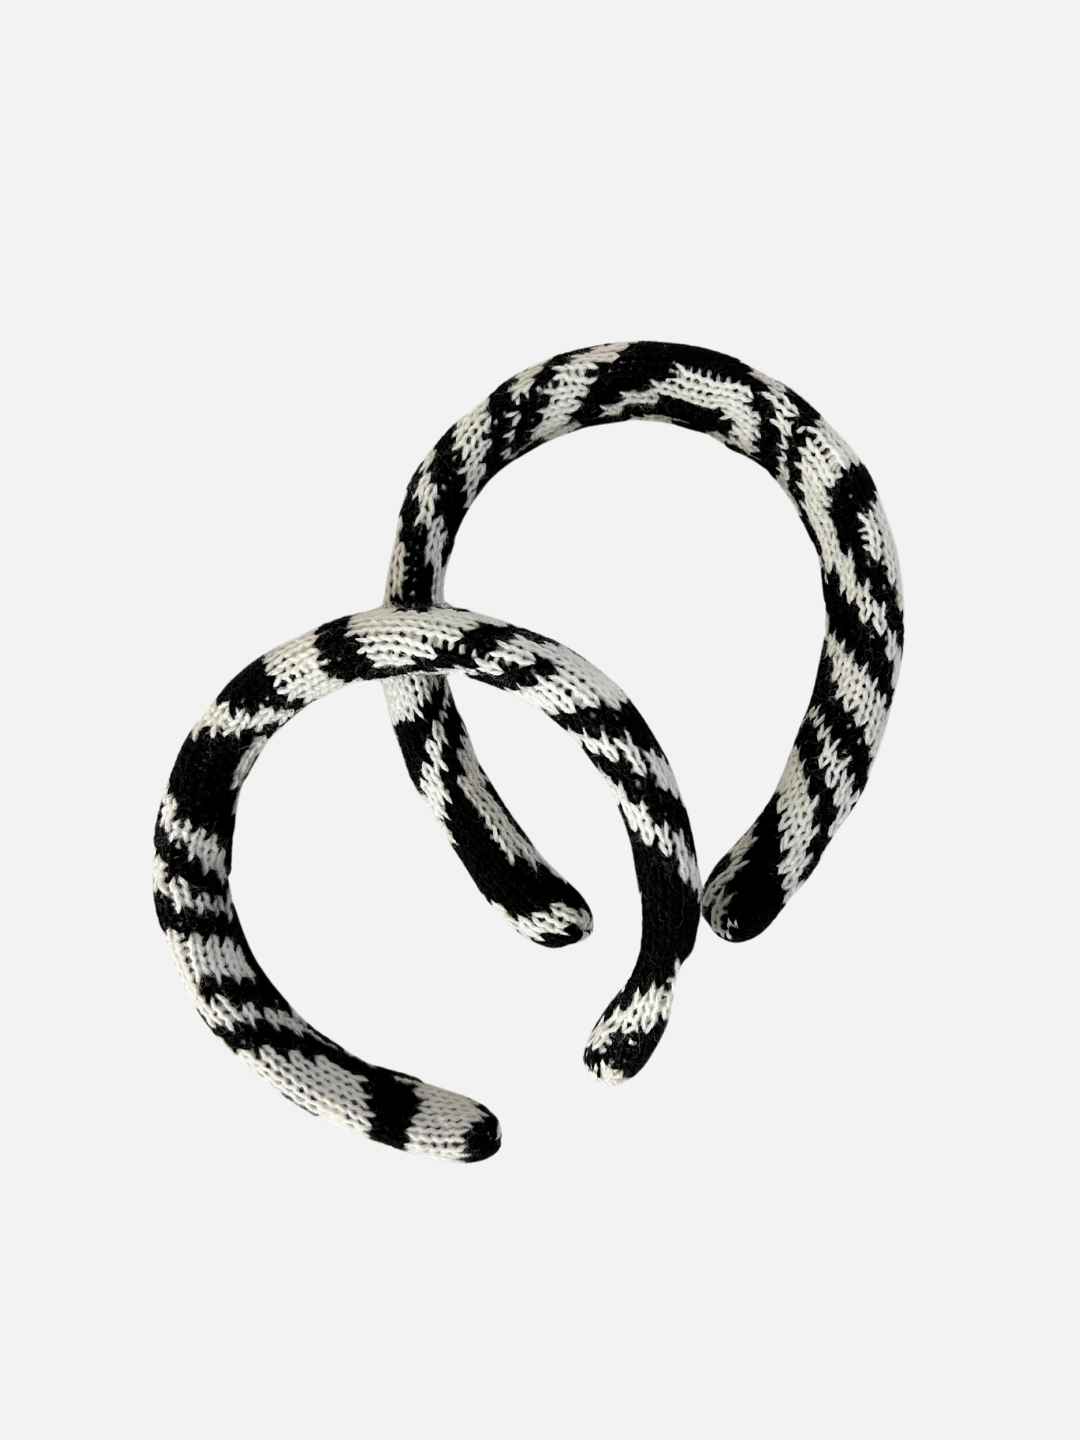 Black/White Swirl | Two sizes of kids' knitted headband in swirls of black and white